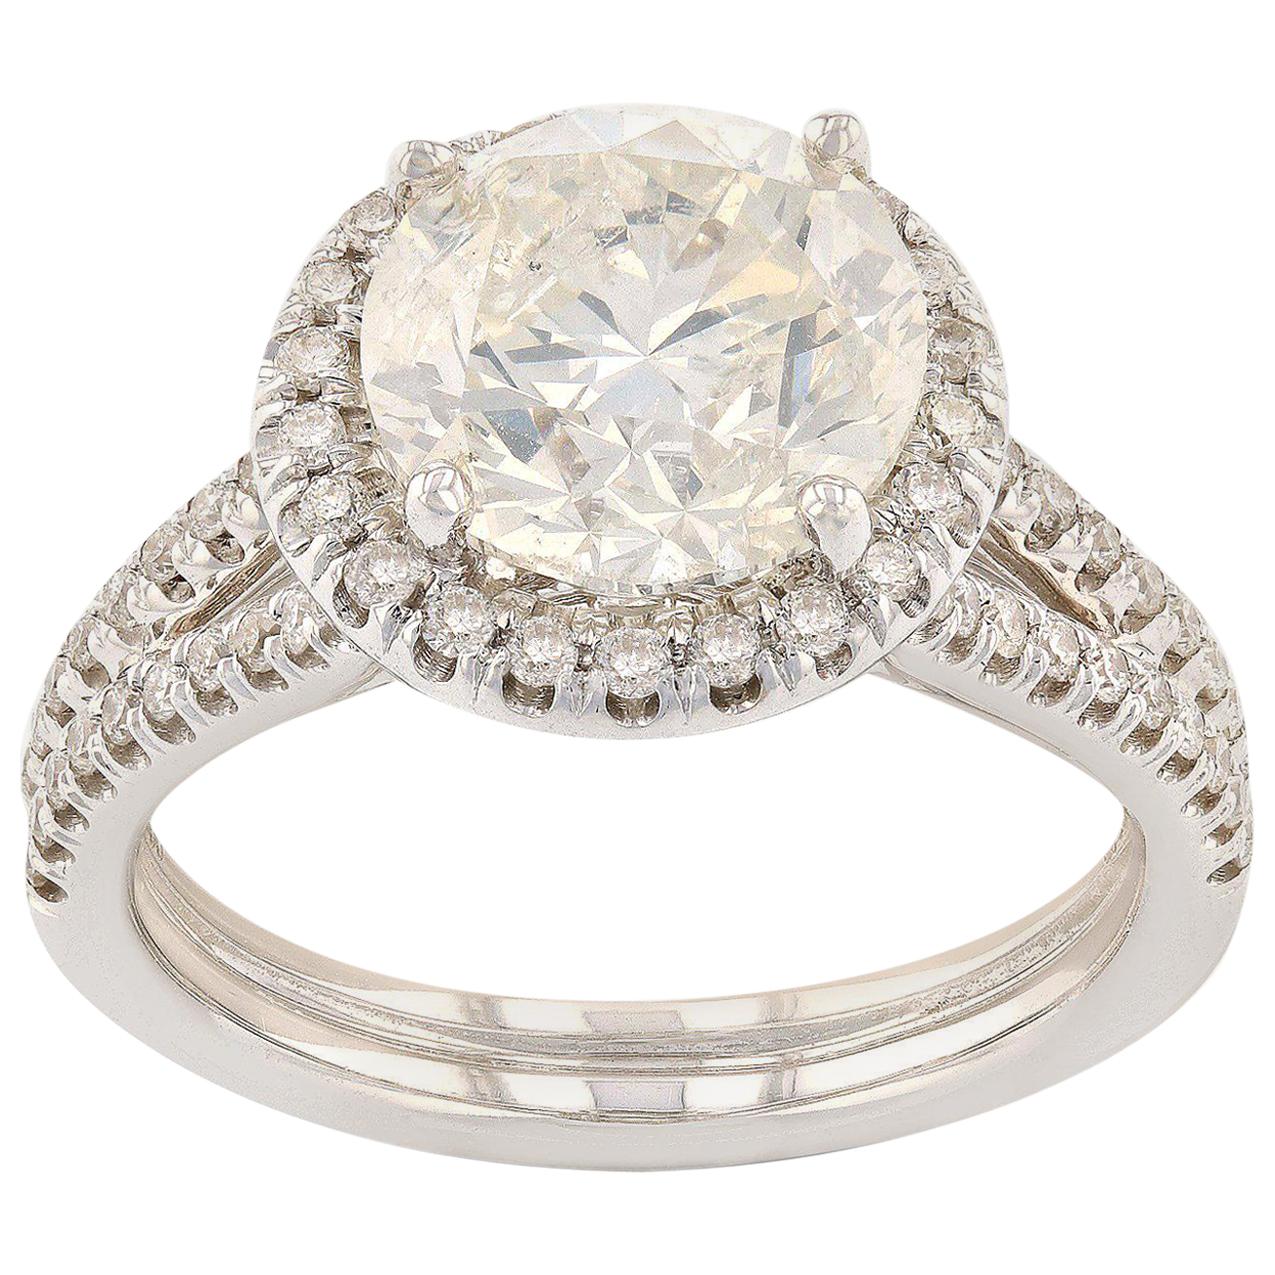 3.18 Carat Diamond Engagement Ring For Sale